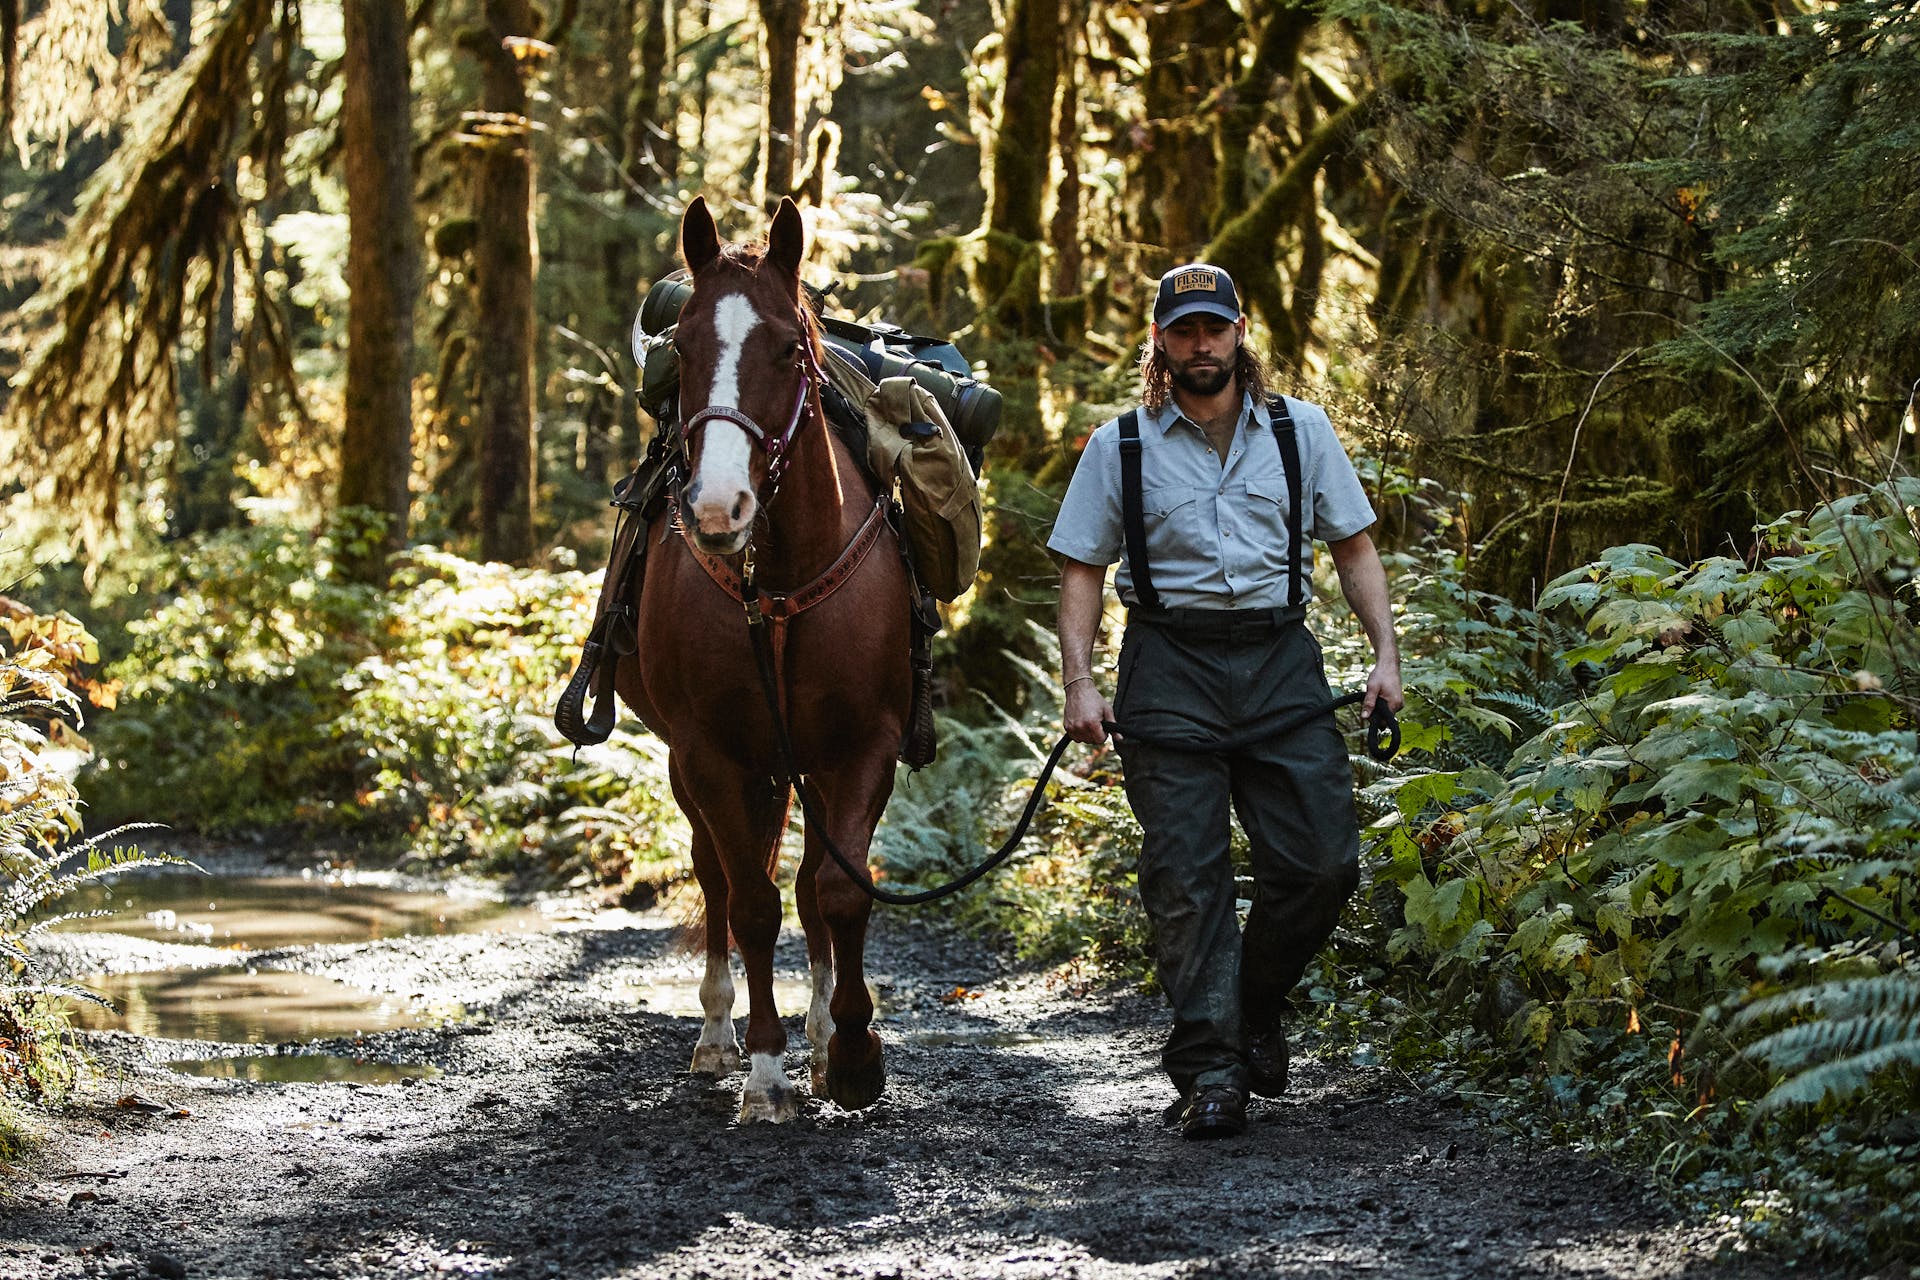 Man wearing Filson Skagit Rain Pants in peat guiding horse along dirt trail